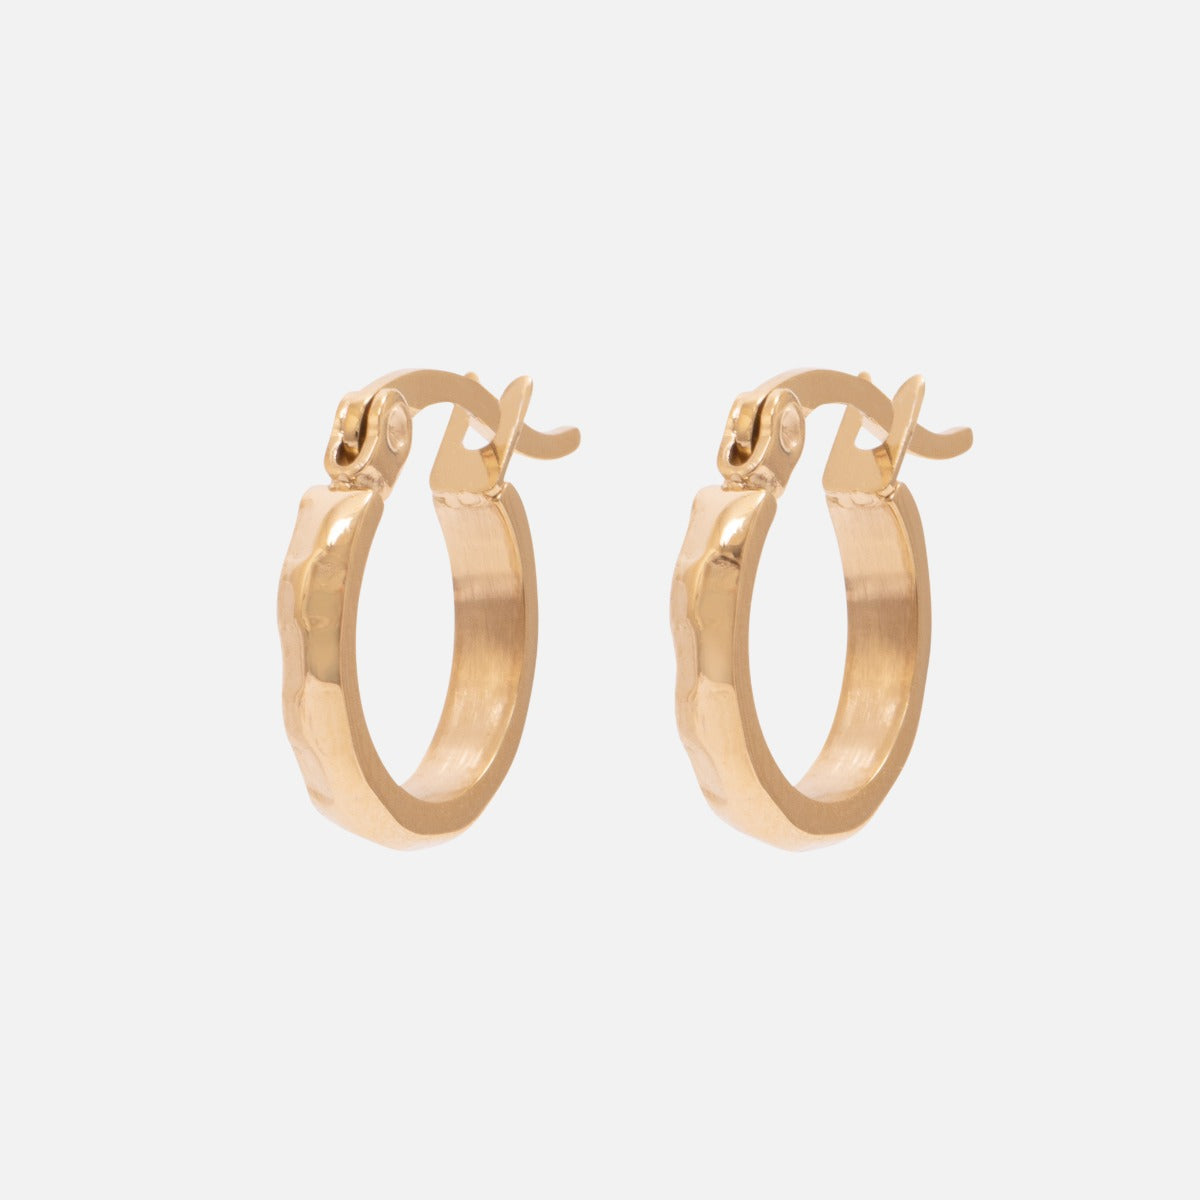 Small golden textured stainless steel hoop earrings